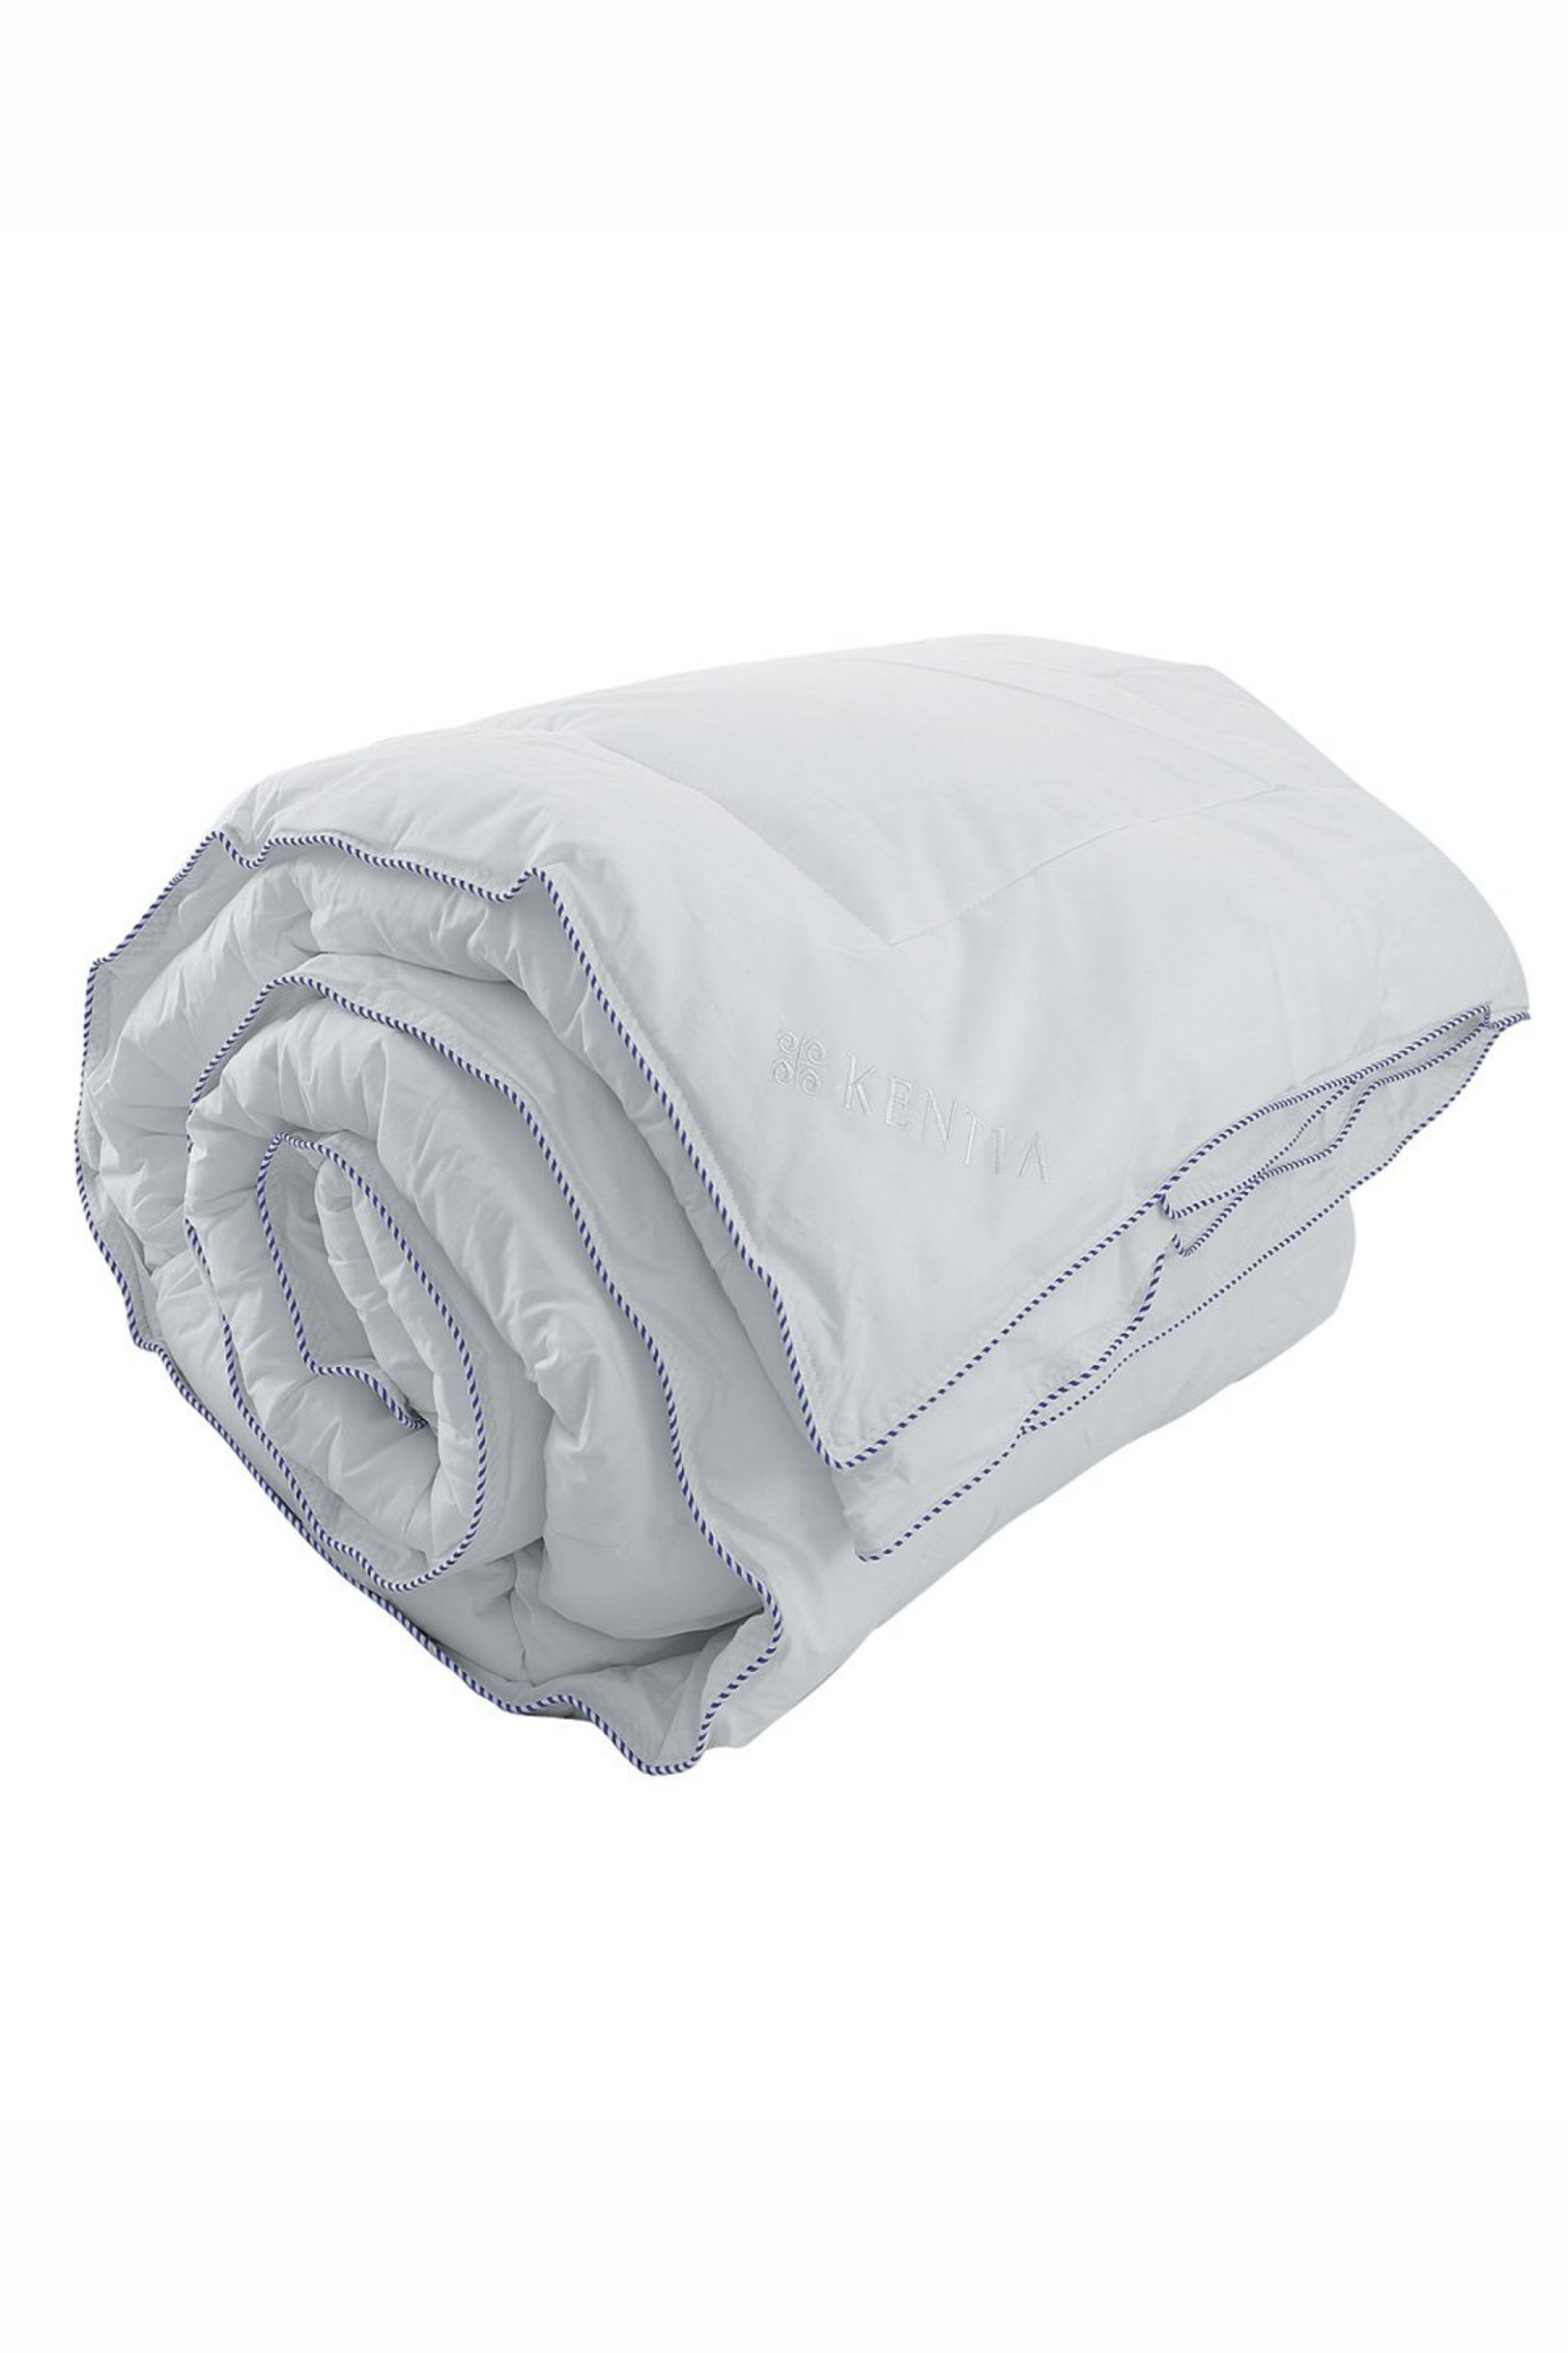 Kentia πάπλωμα king size 3D Hollowfiber "Dream Quilt" 260 x 240 cm - 000033160 200890804075